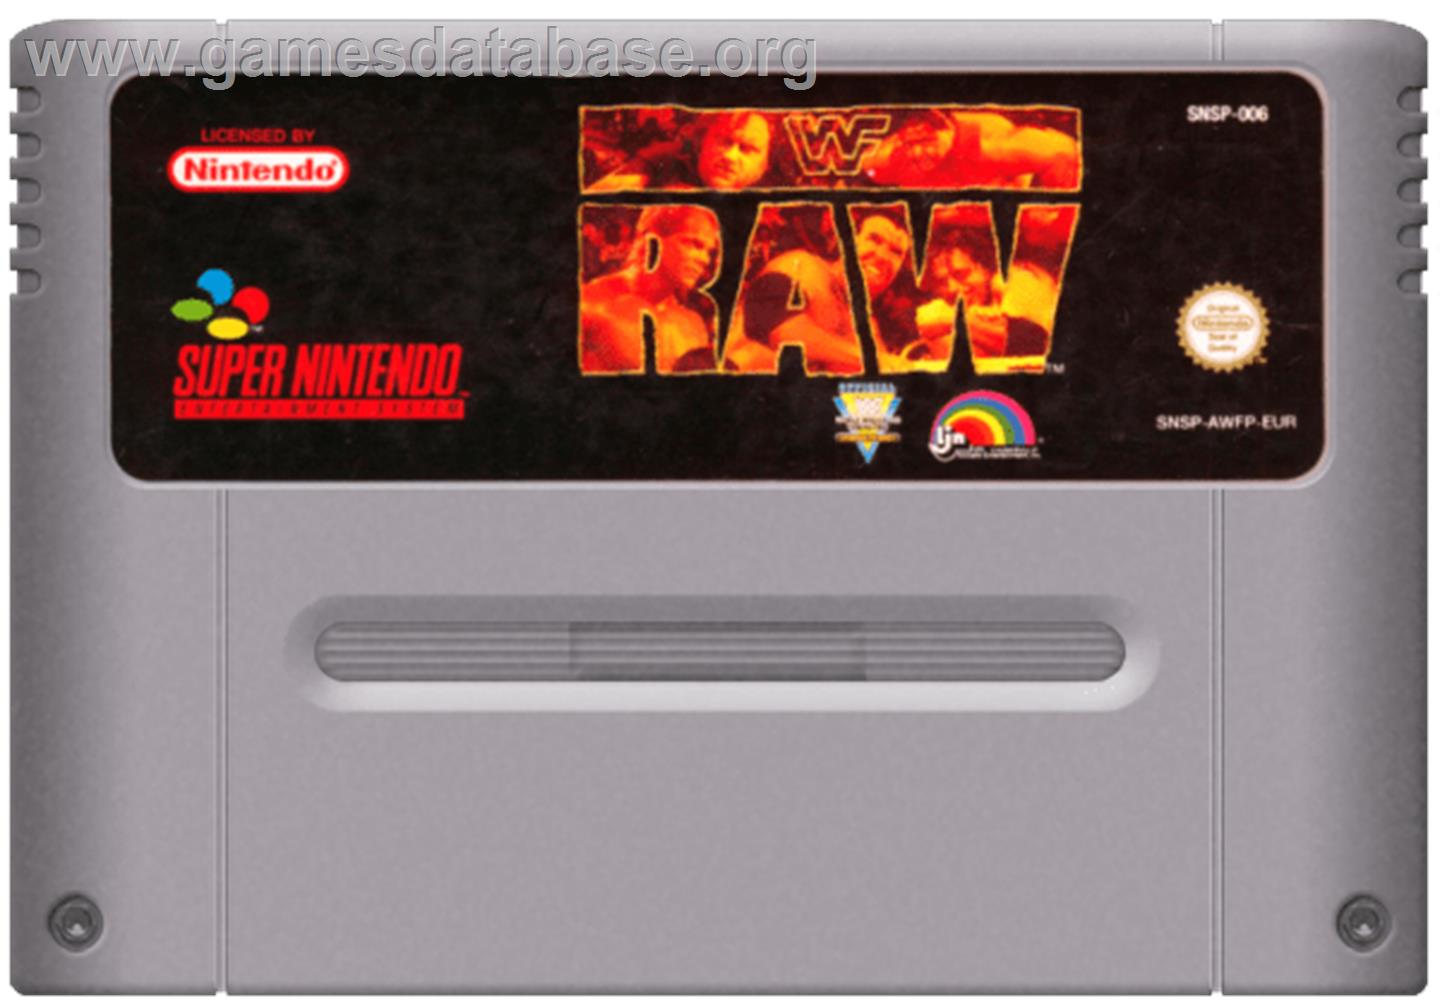 WWF Raw - Nintendo SNES - Artwork - Cartridge